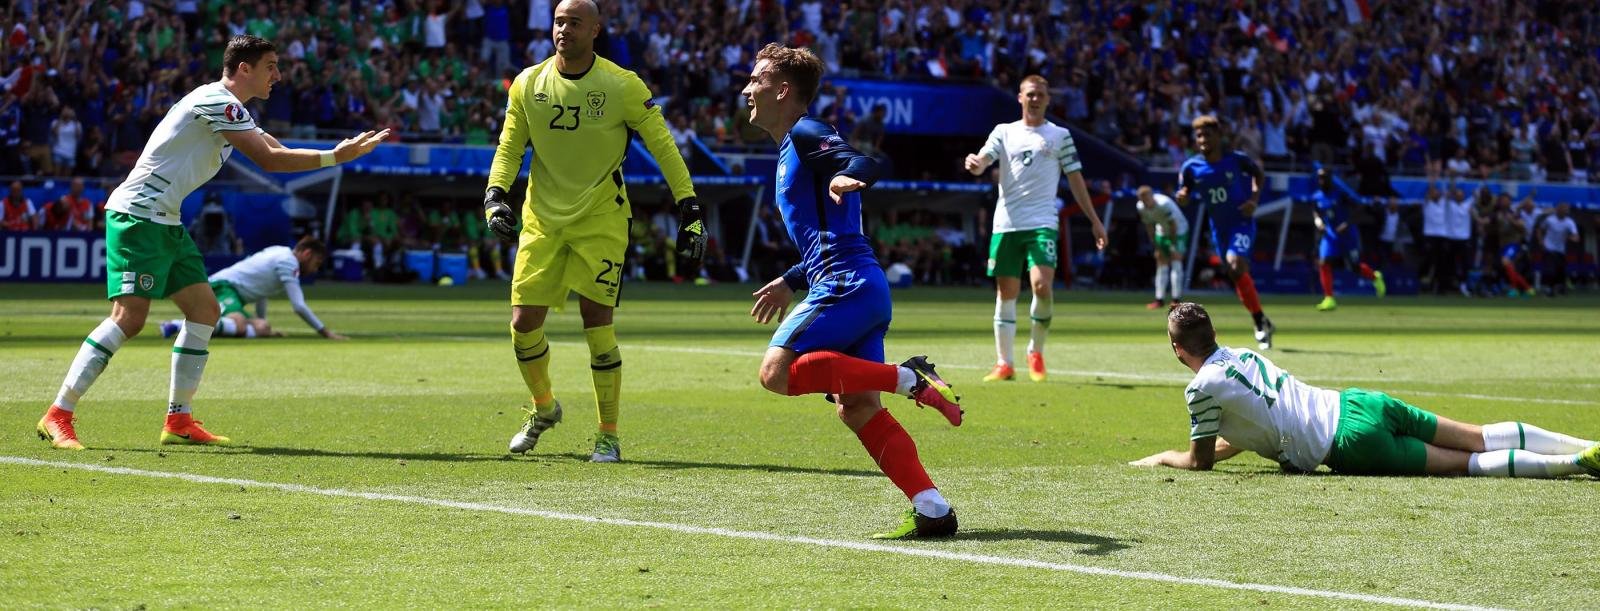 Profile: EURO 2016 Player of the Tournament, Antoine Griezmann